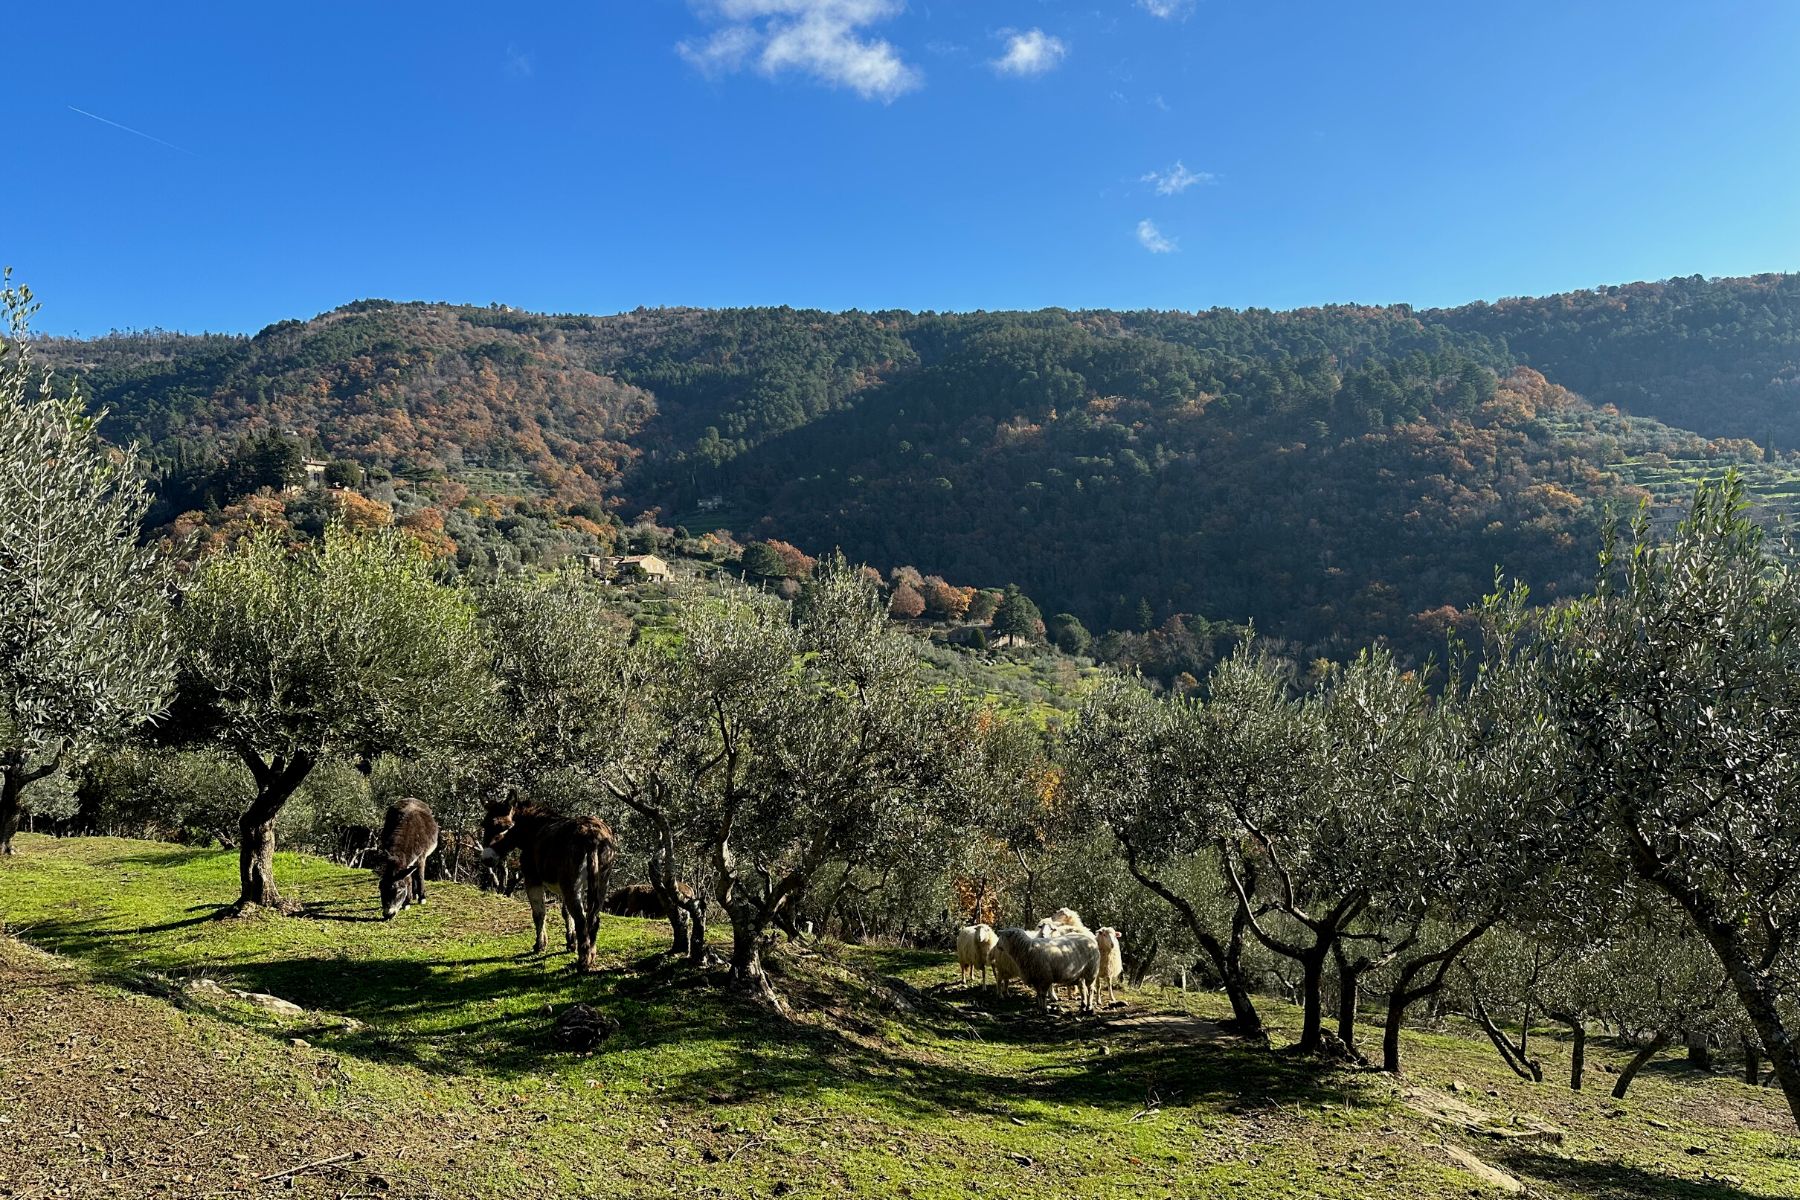 Les oliveraies dans la campagne de Cortona